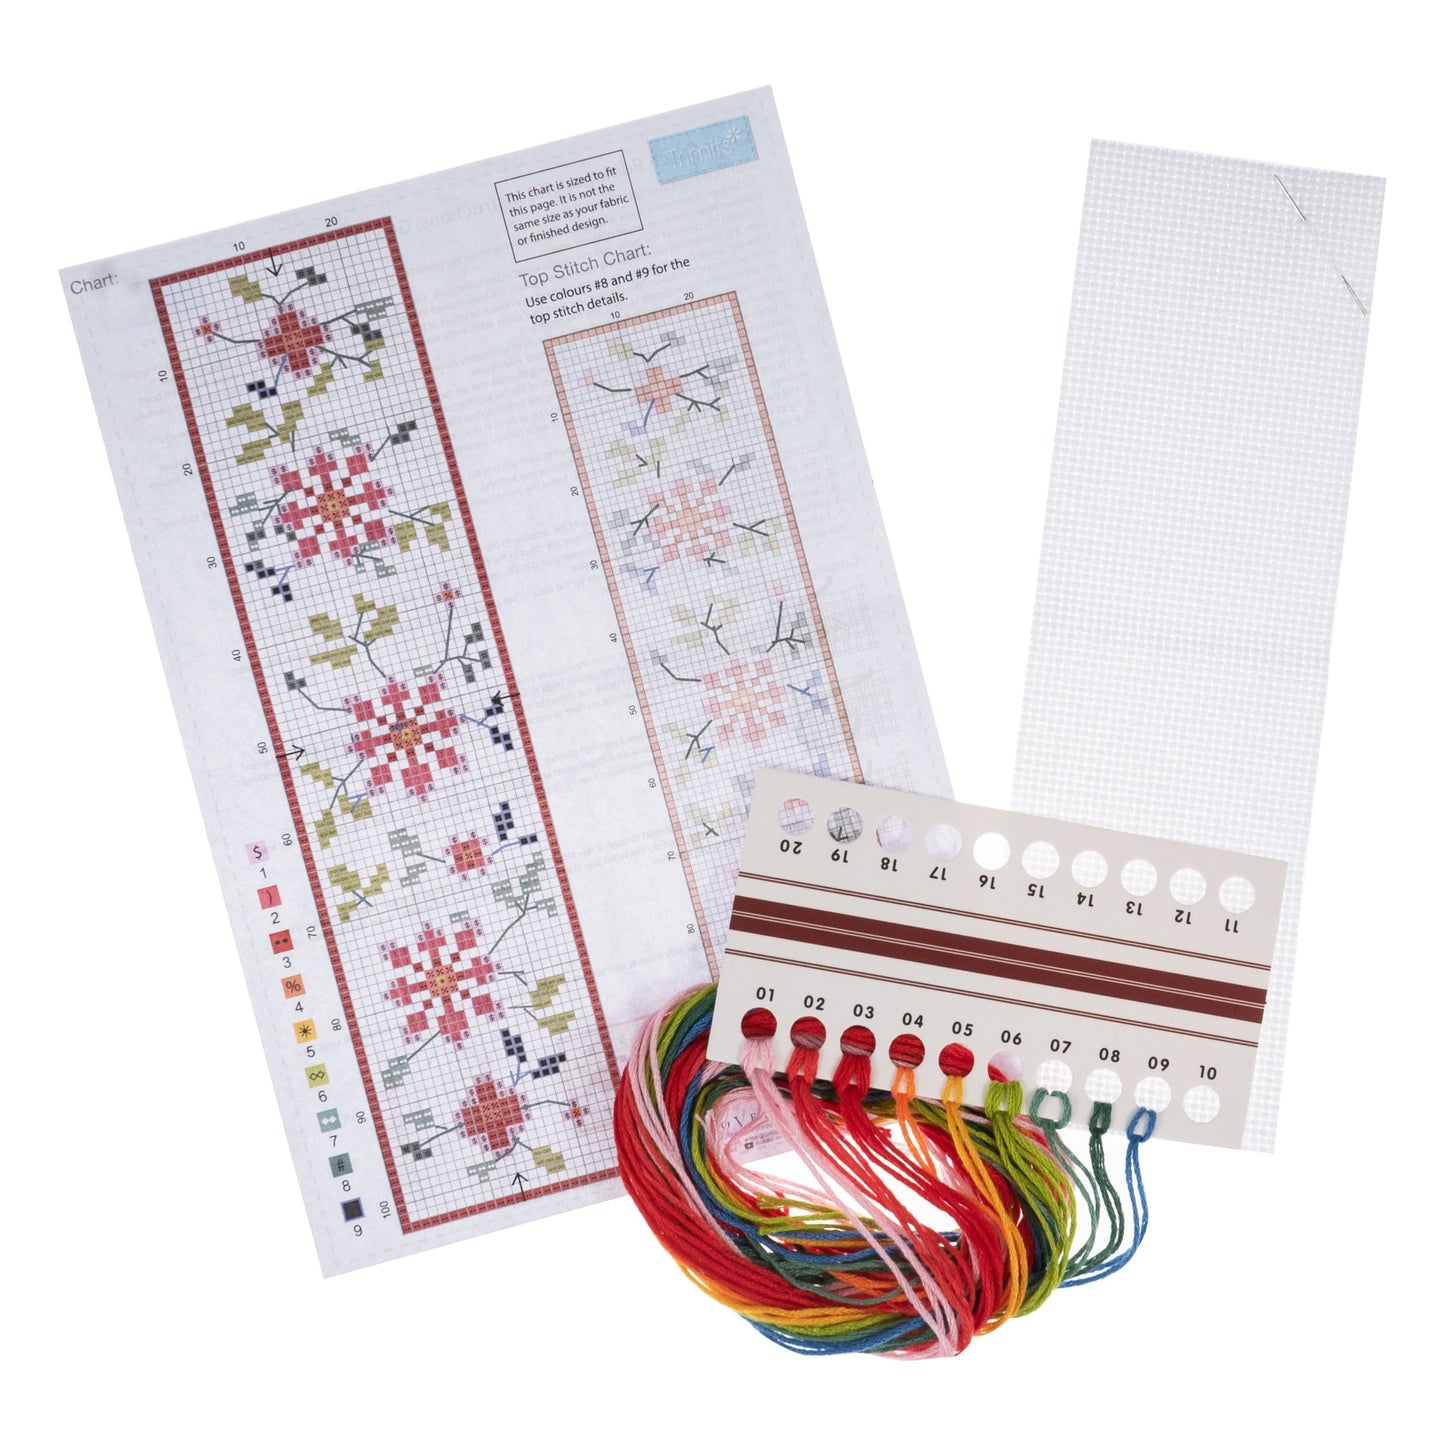 Cross Stitch Bookmark Kit Floral